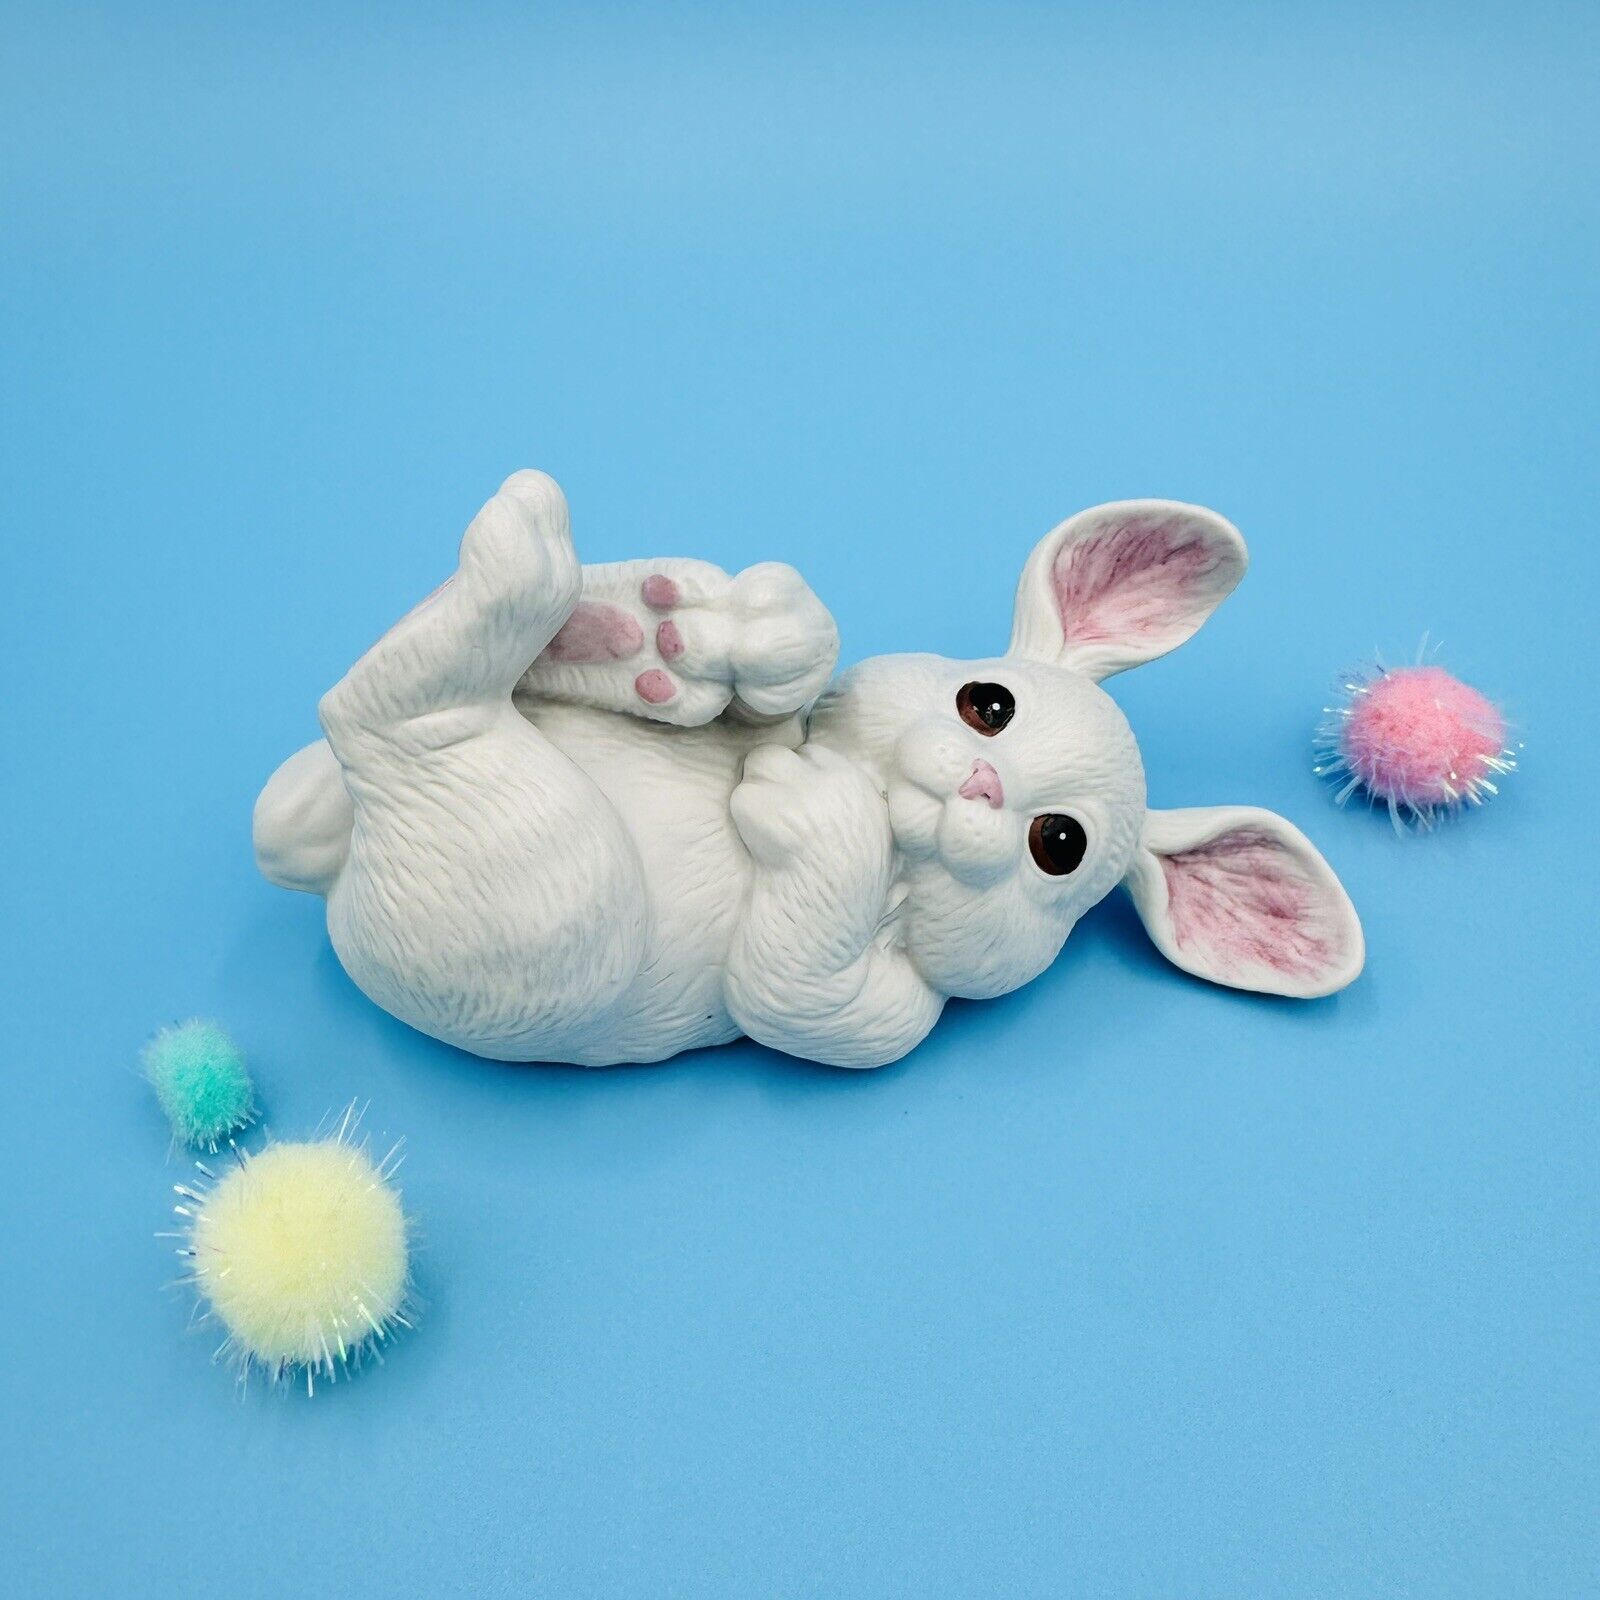 Vintage Enesco 1992 Kathy Wise Ceramic White Bunny Rabbit Figure Pink Ear 3”x5”